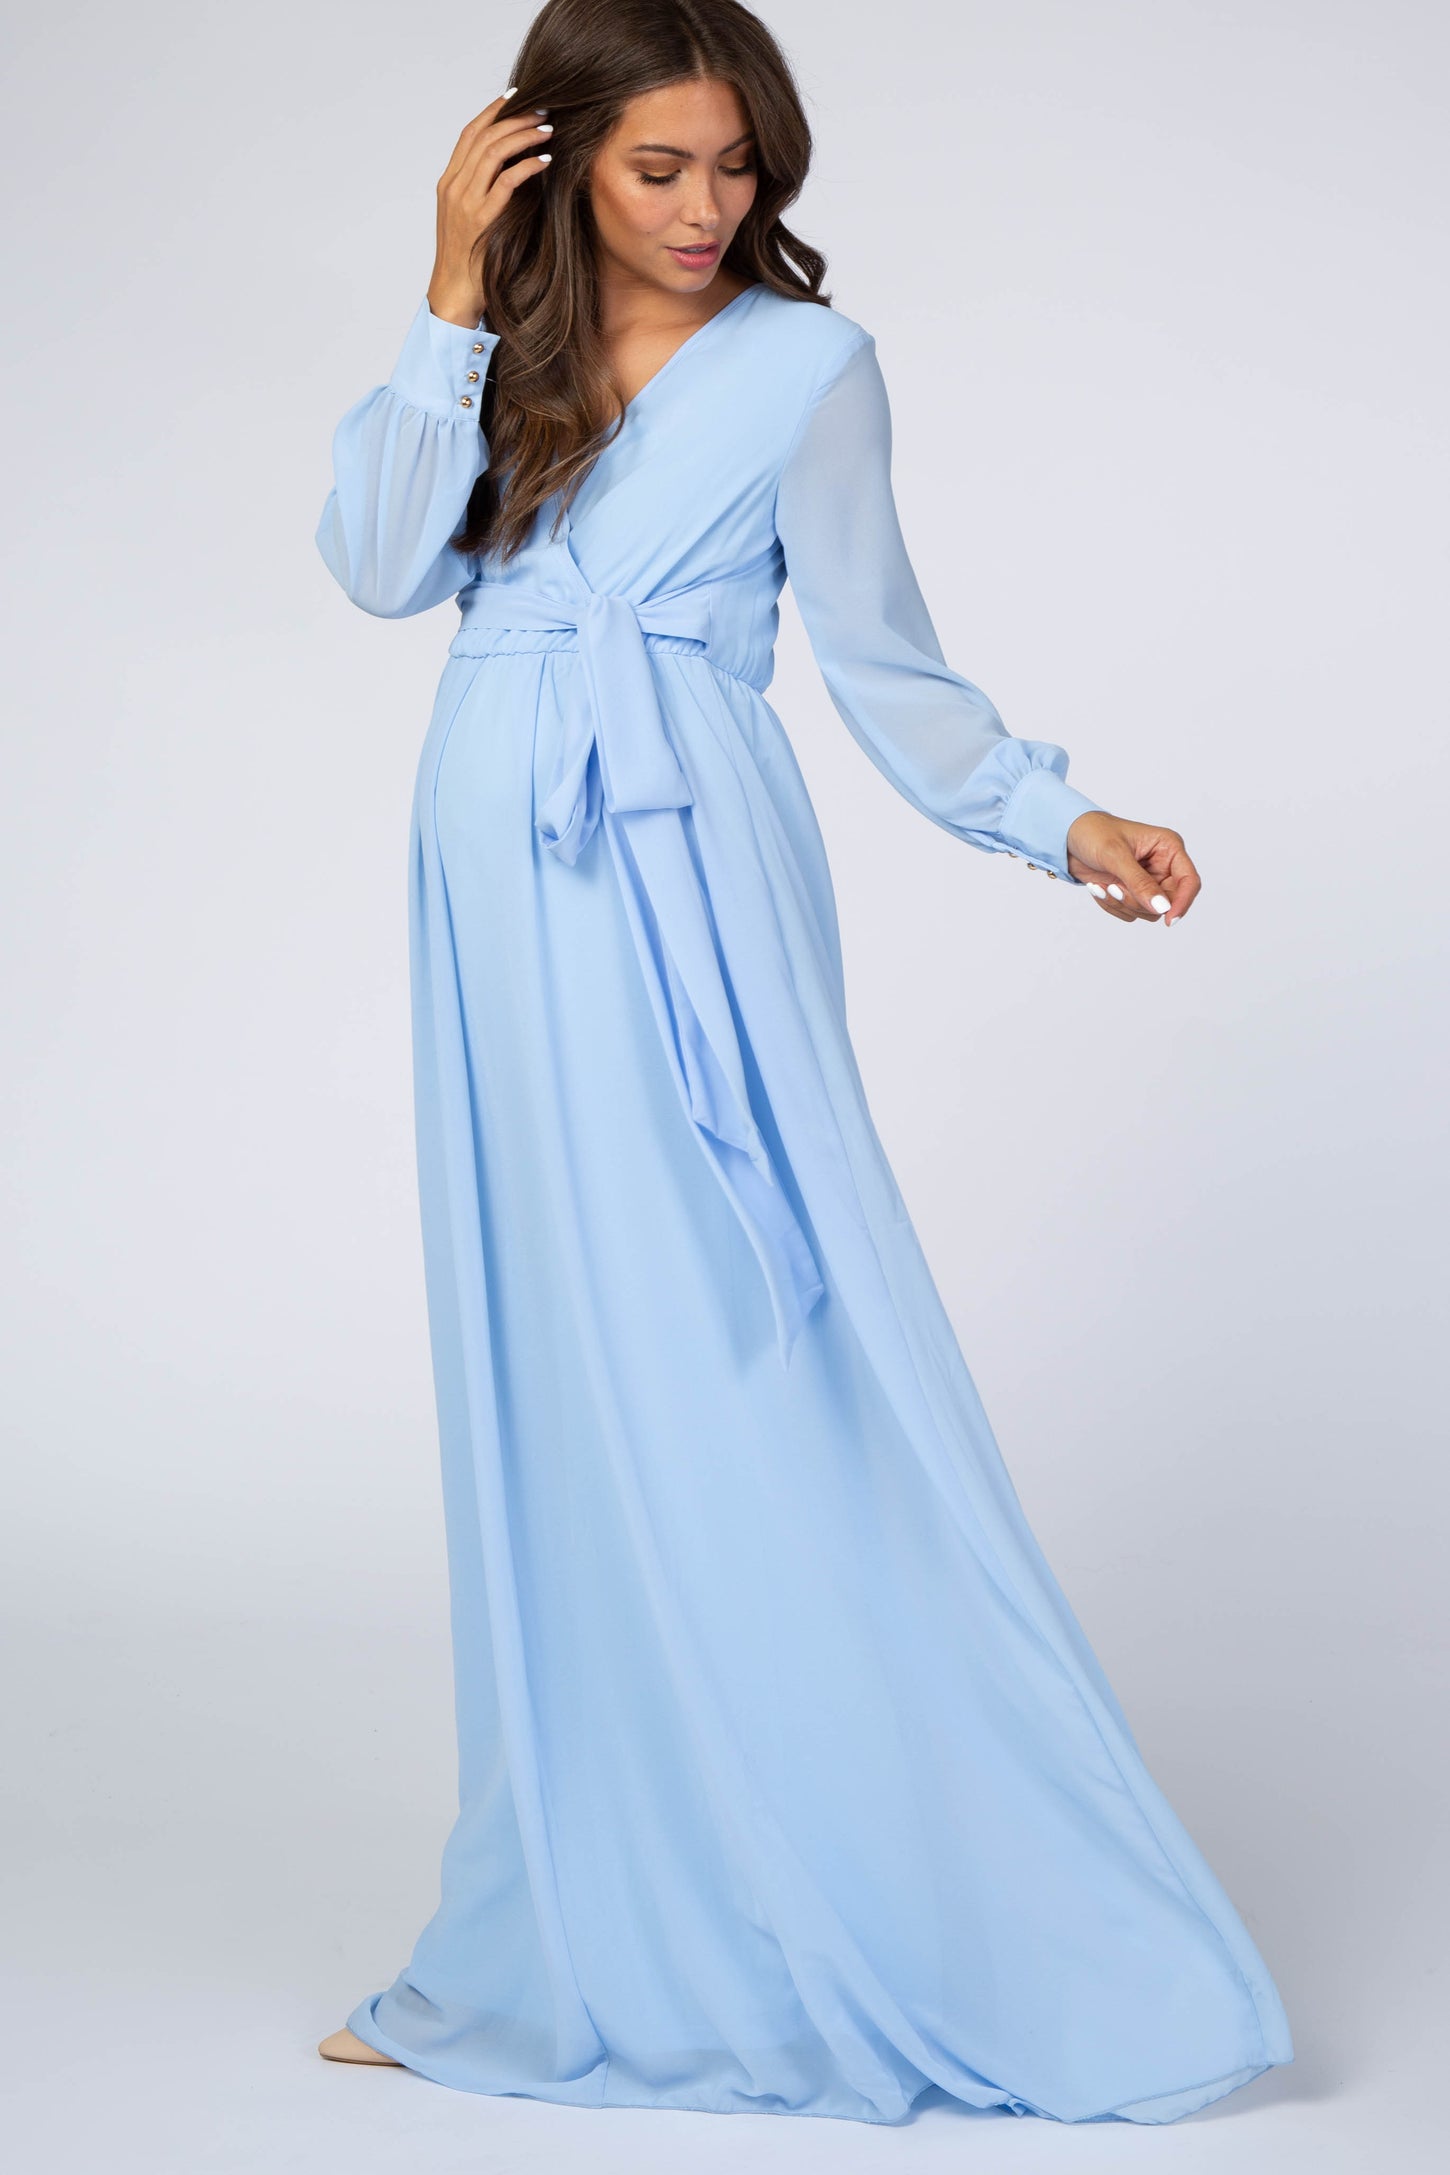 Sleeves Navy Blue Evening Dress Formal Gown (36183005) - eDressit